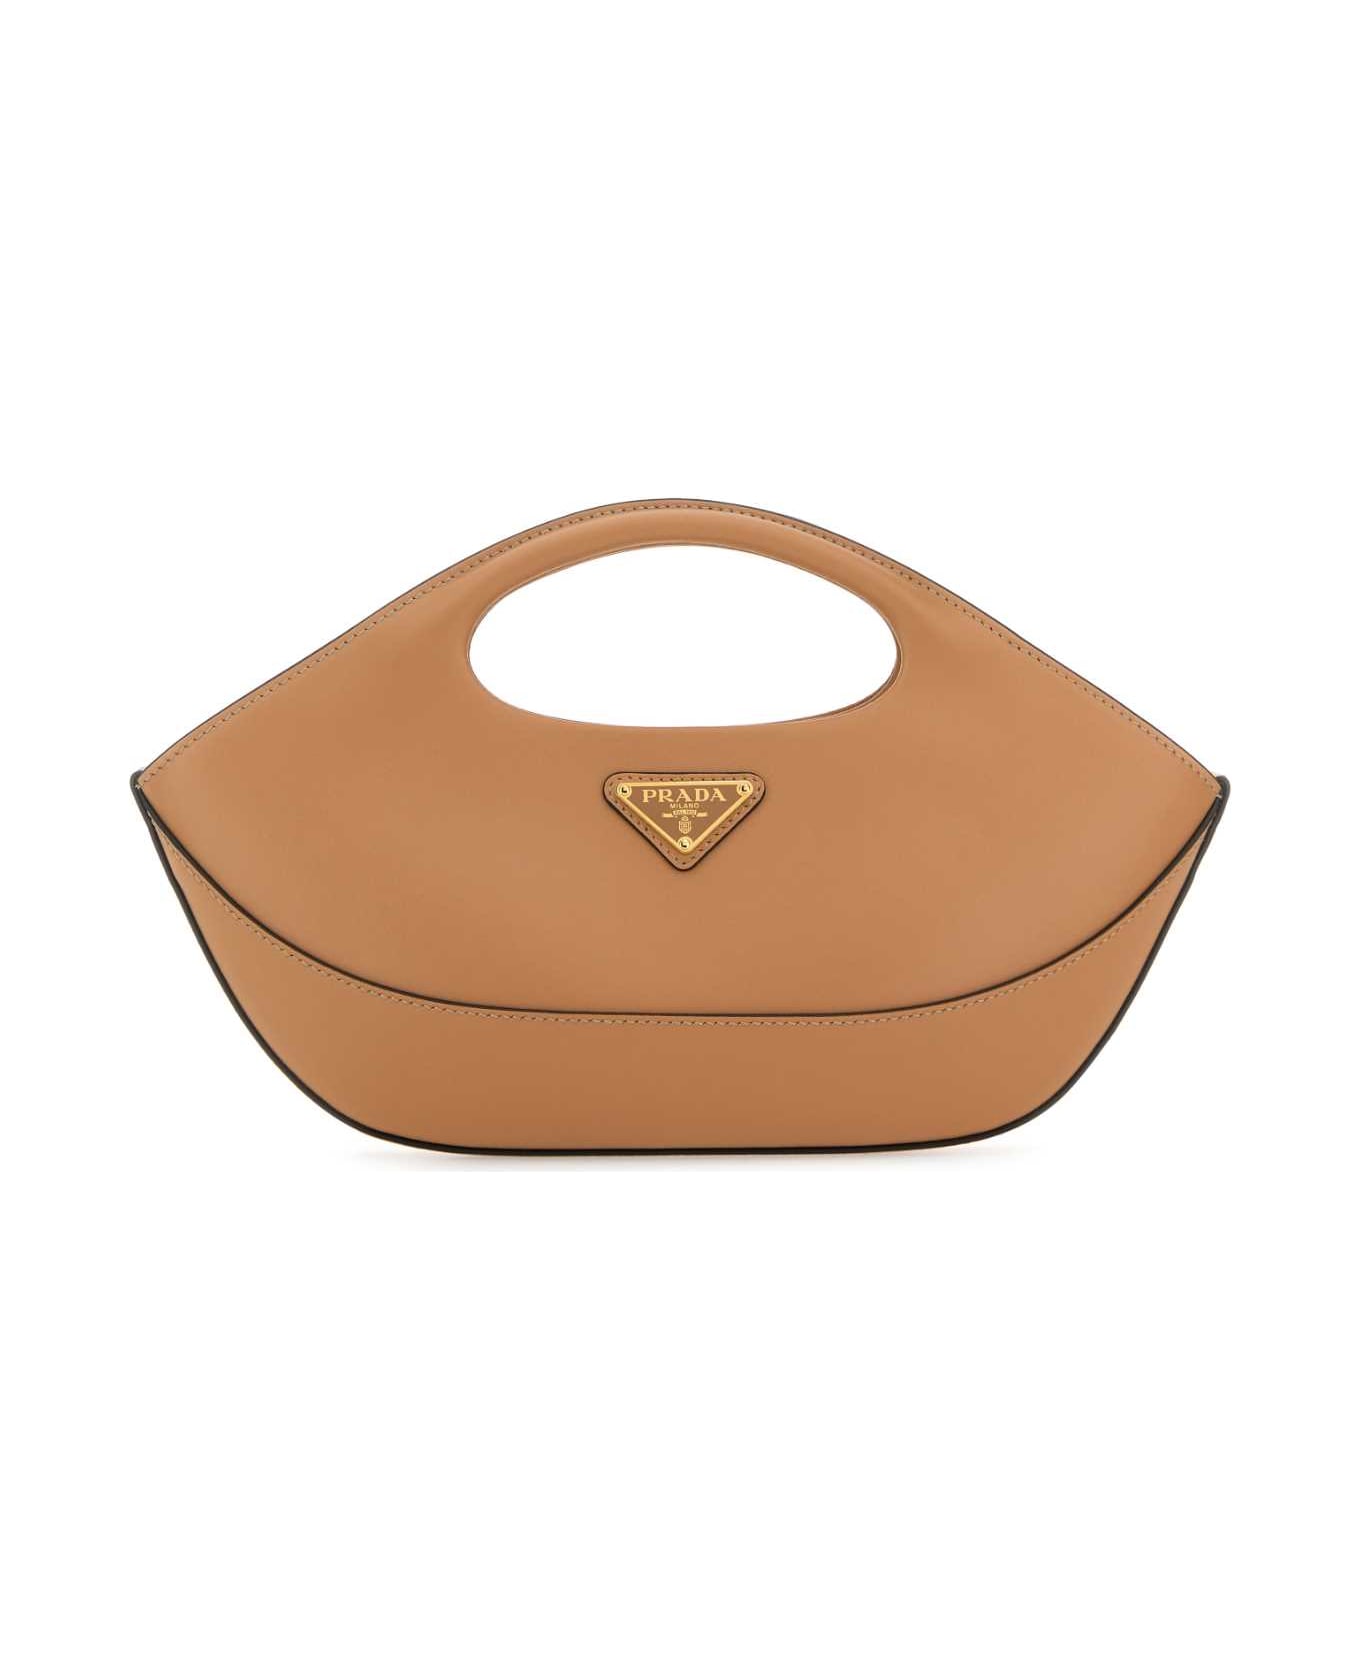 Prada Camel Leather Handbag - NATURALEN